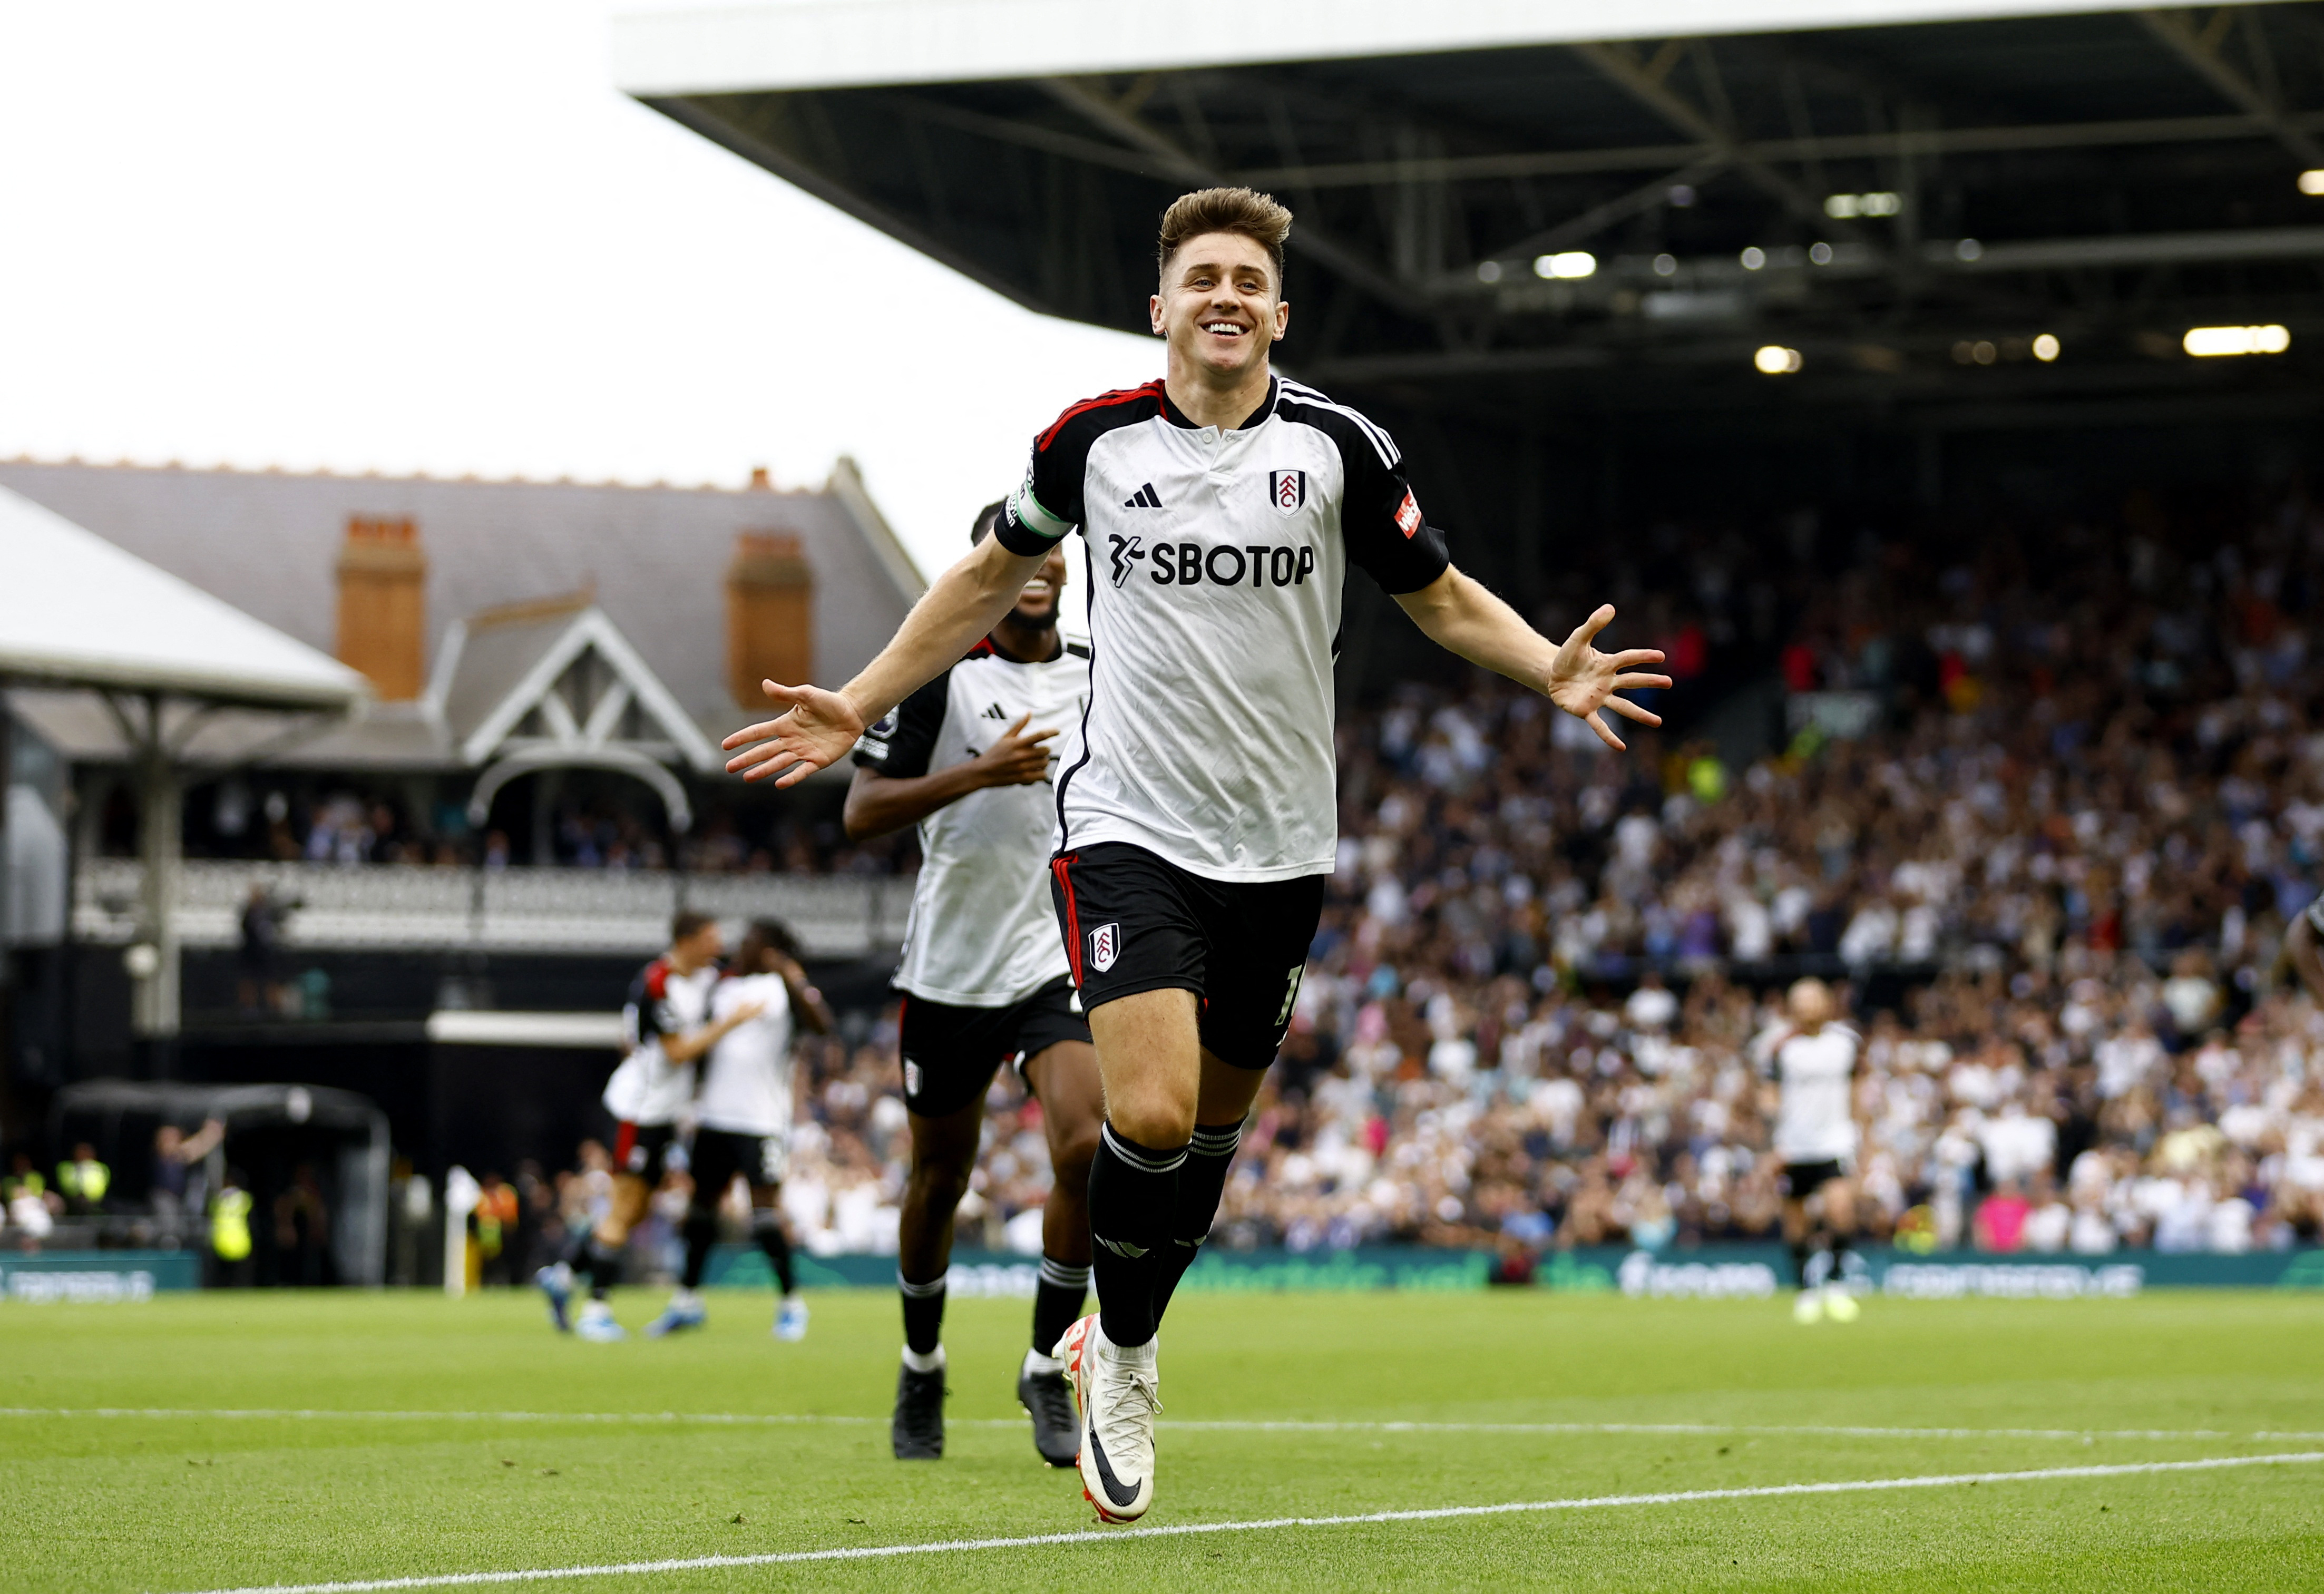 Fulham beat Sheffield United 3-1 after horror injury to Basham | Reuters